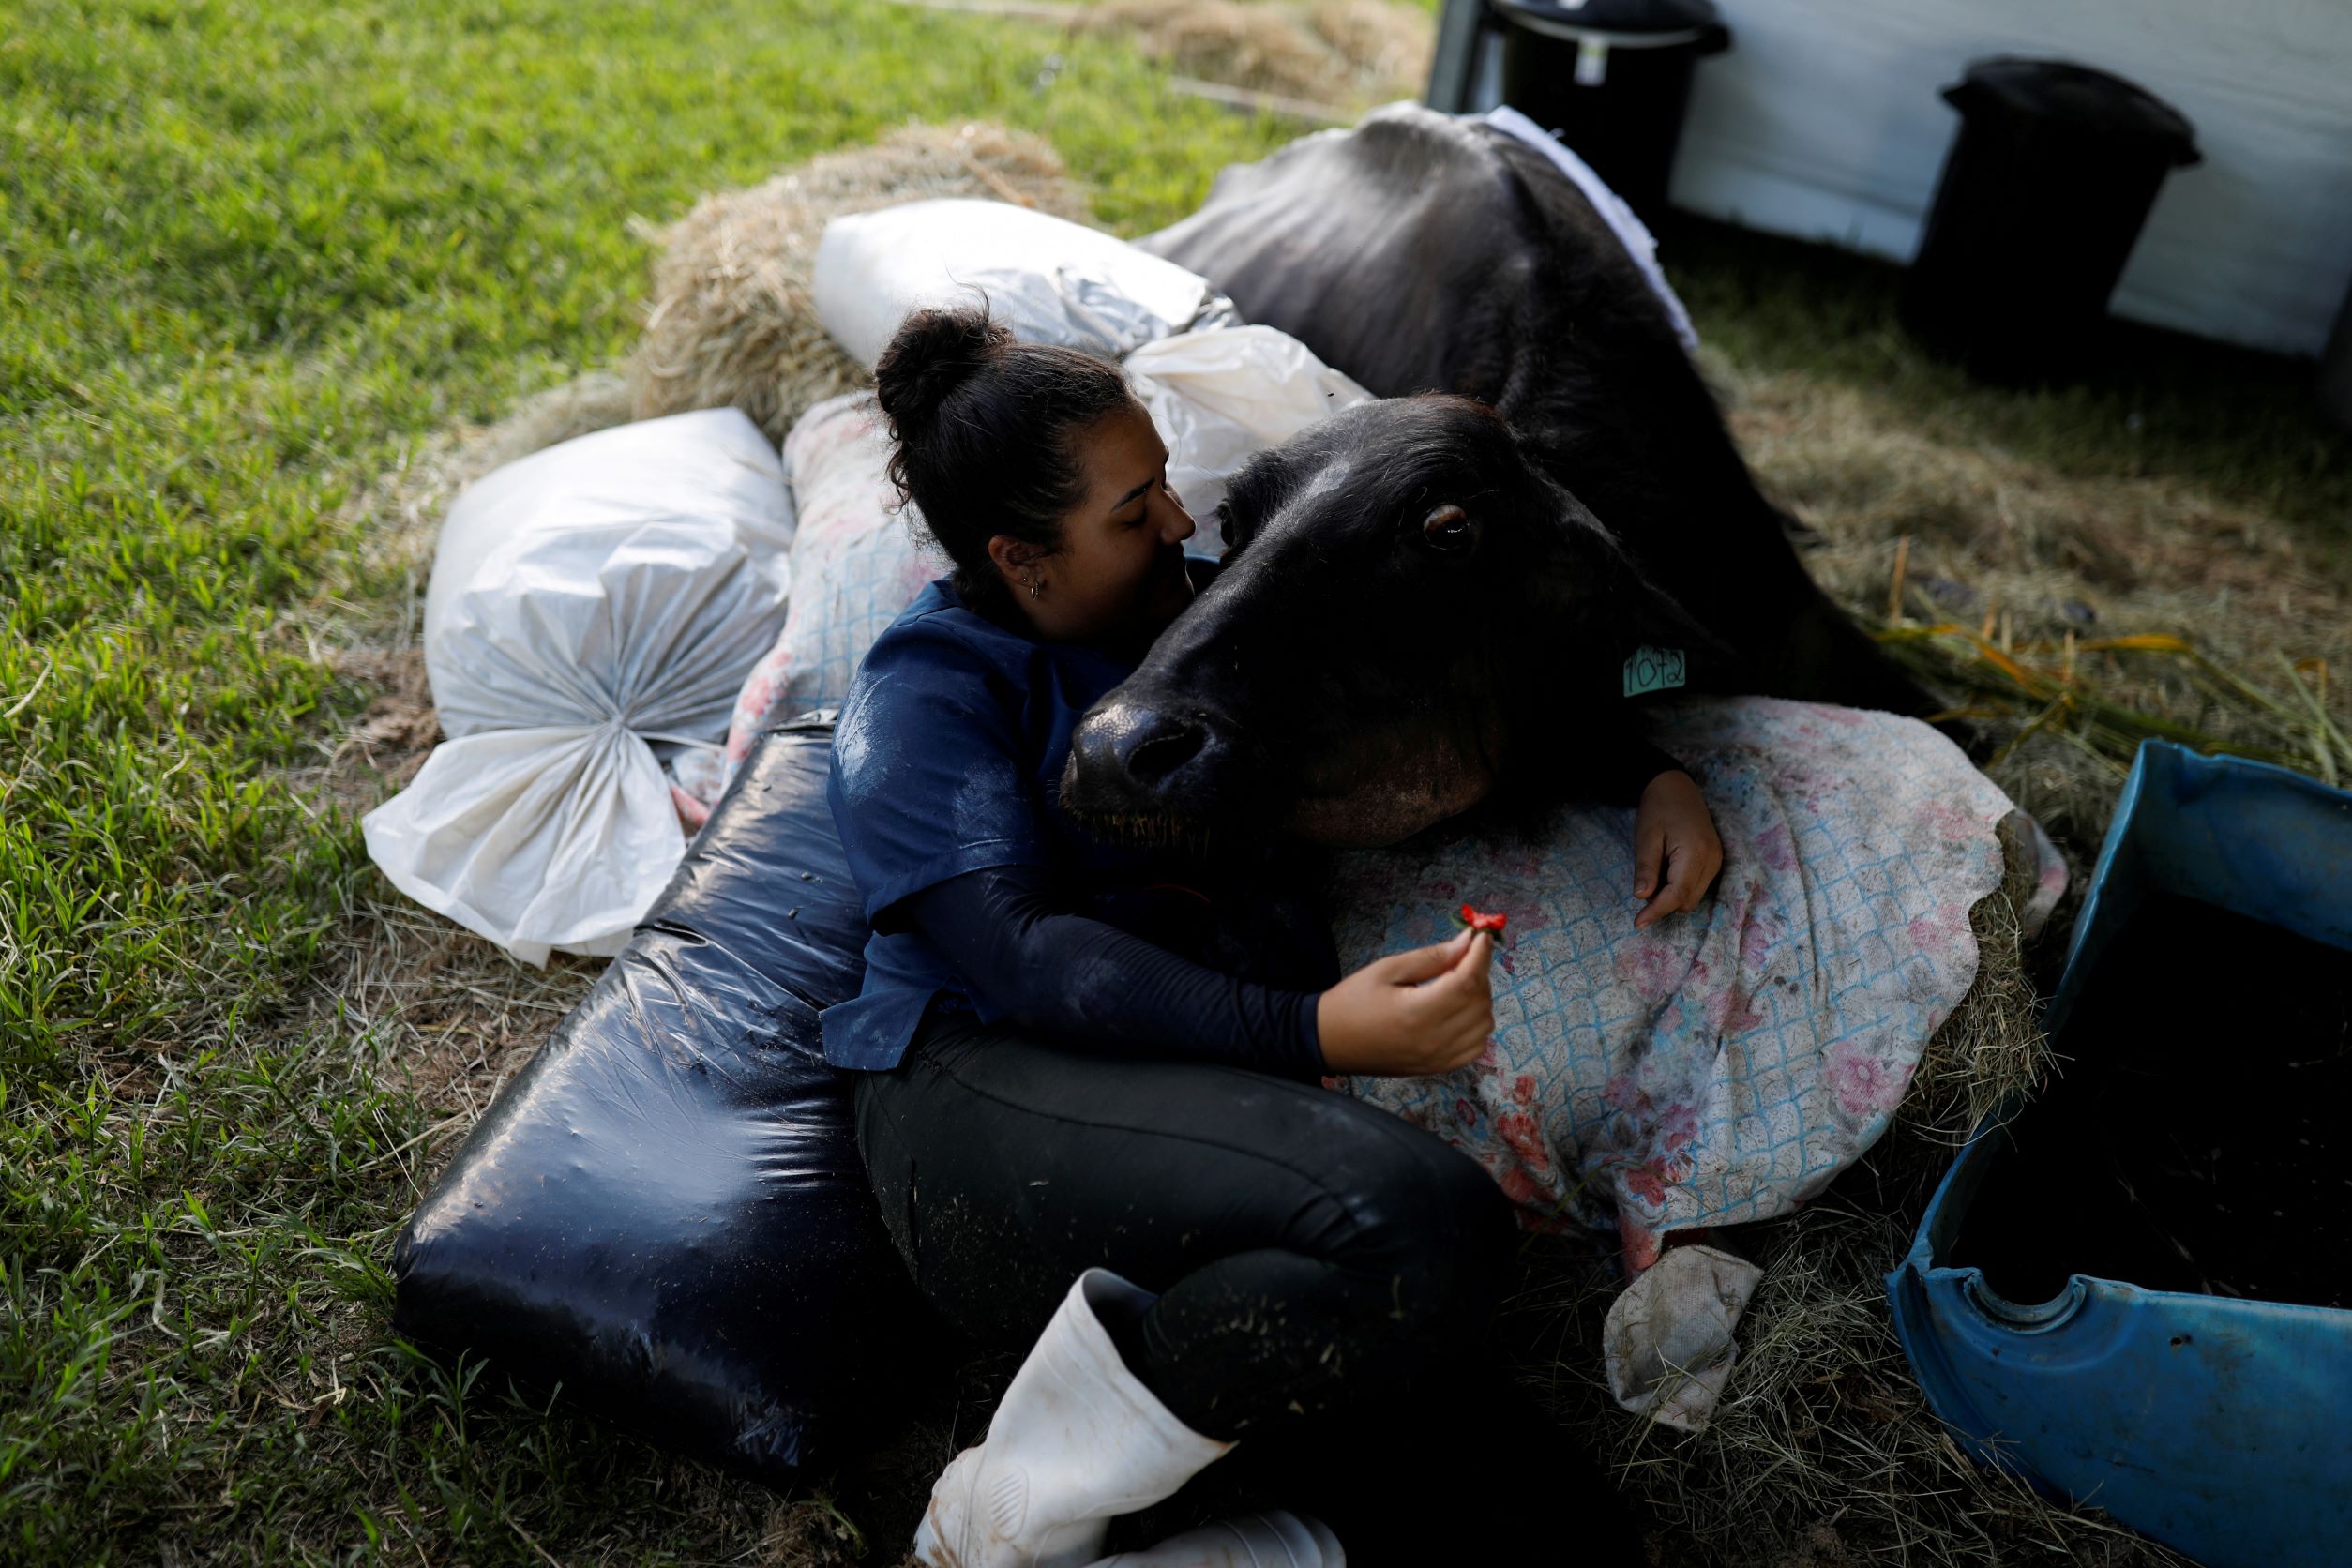 Volunteer Juliana Fraga lies down with a malnourished buffalo